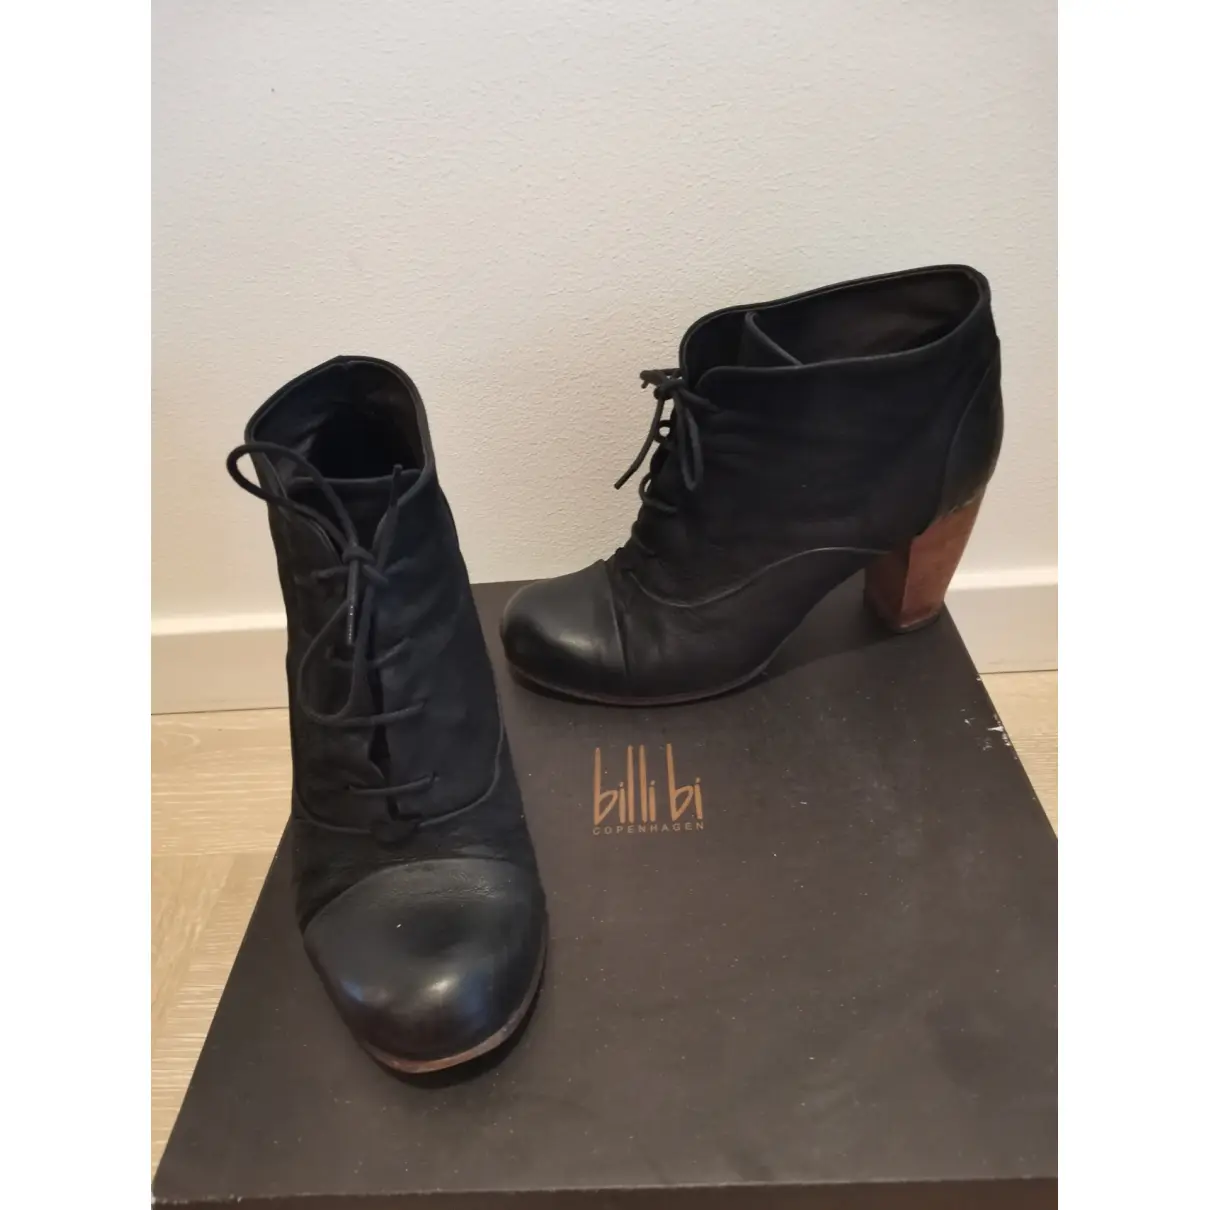 Buy Billi Bi Leather lace up boots online